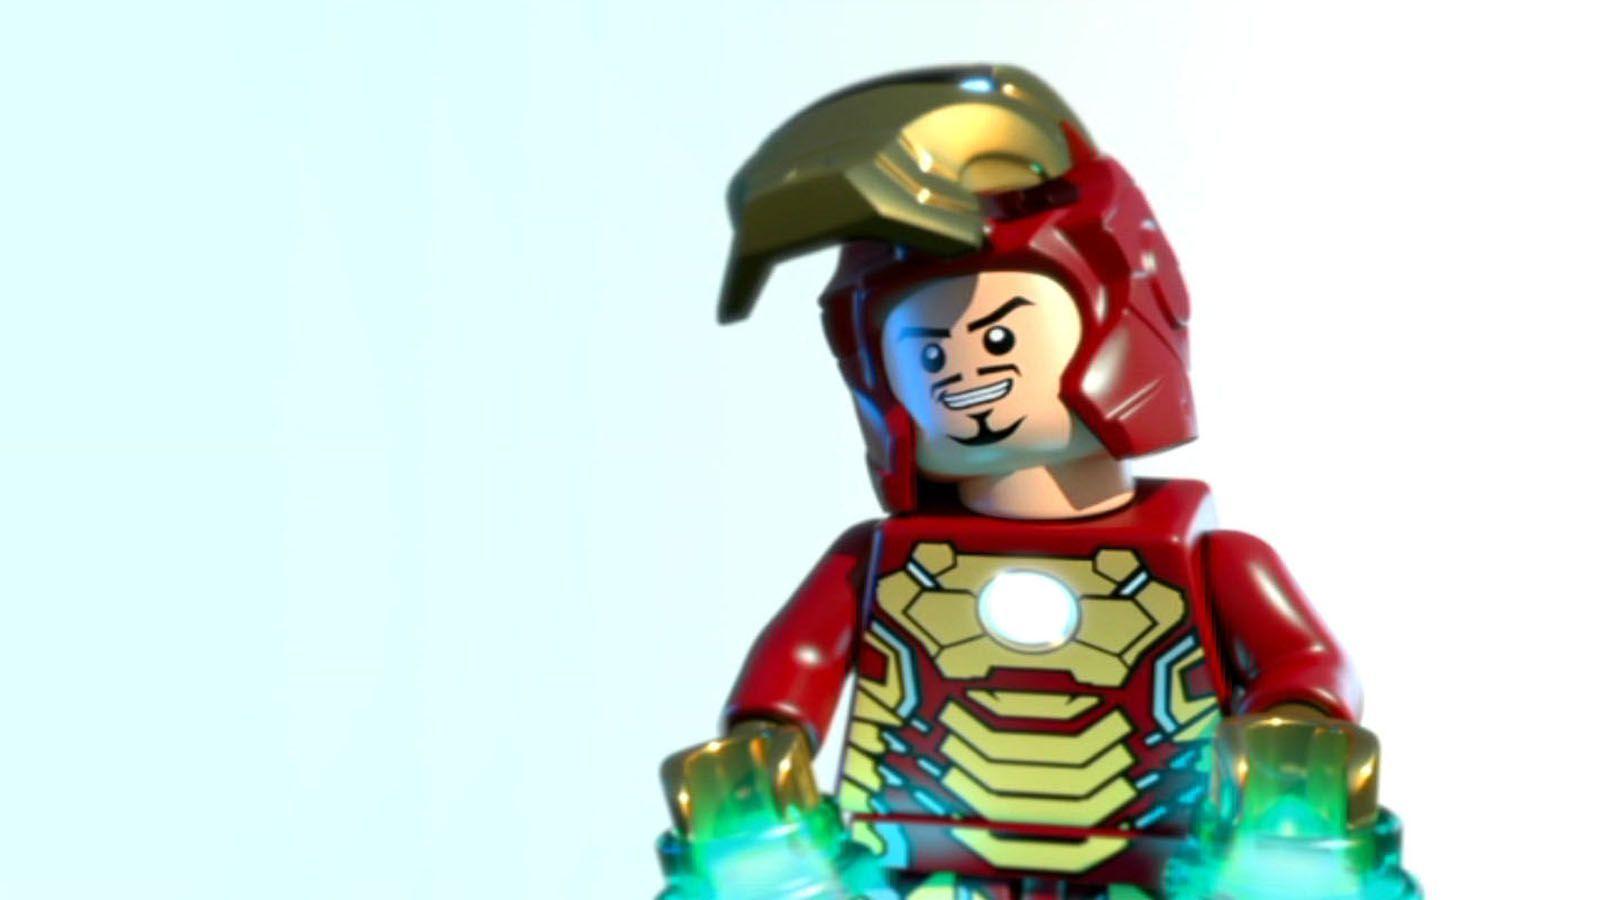 Lego Iron Man Wallpaper. Movie Wallpaper. Wallpaper, Wallpaper